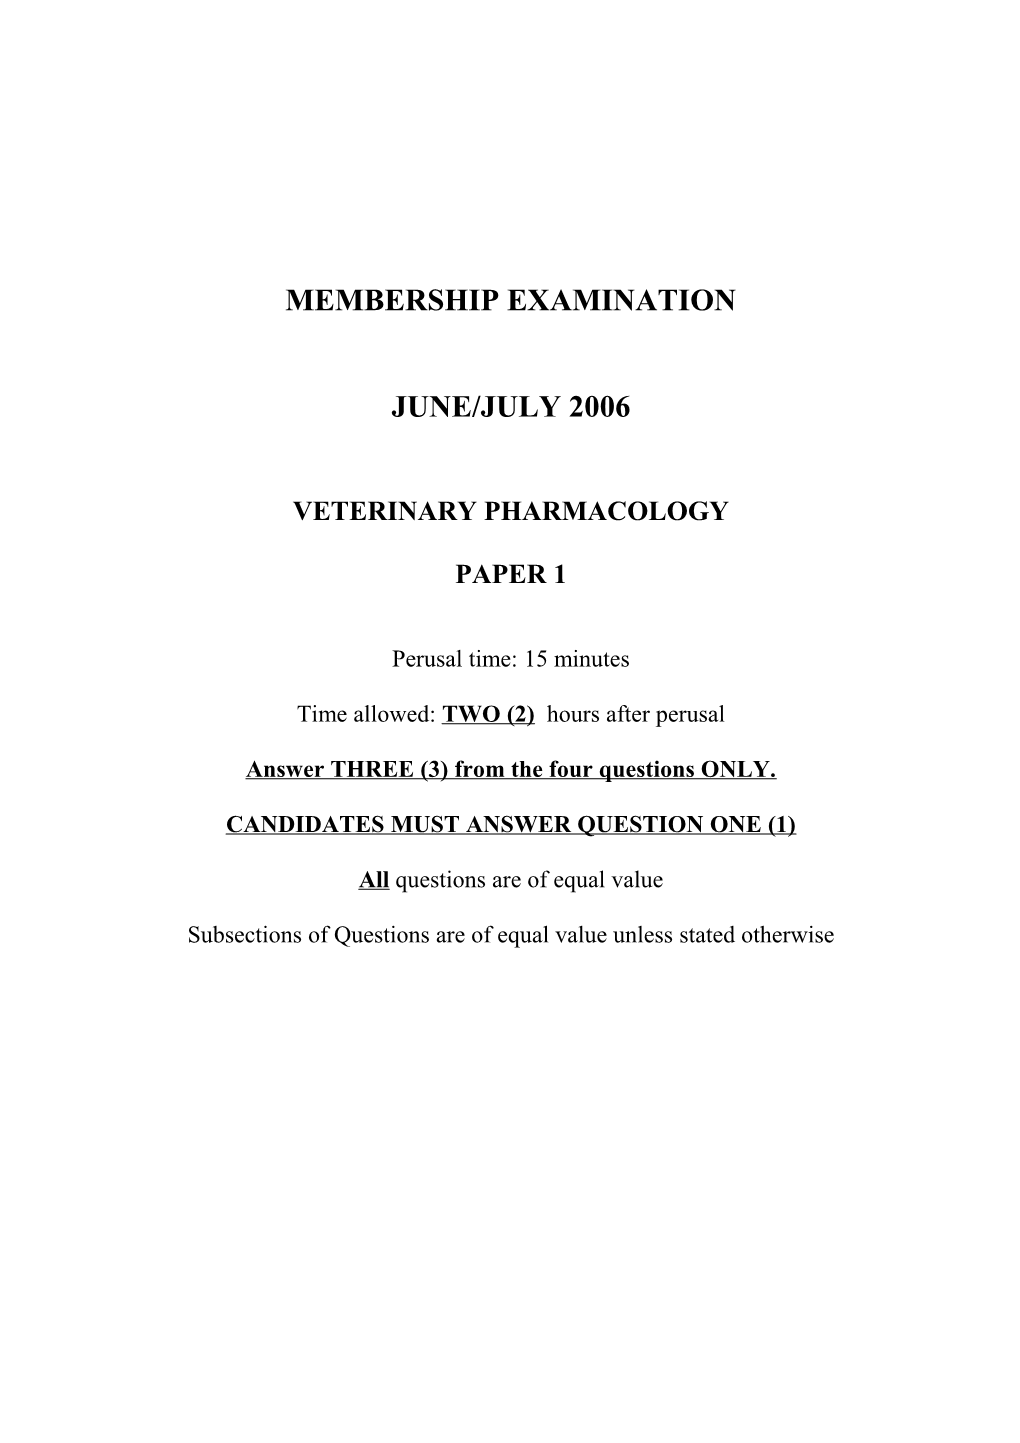 Membership Examination